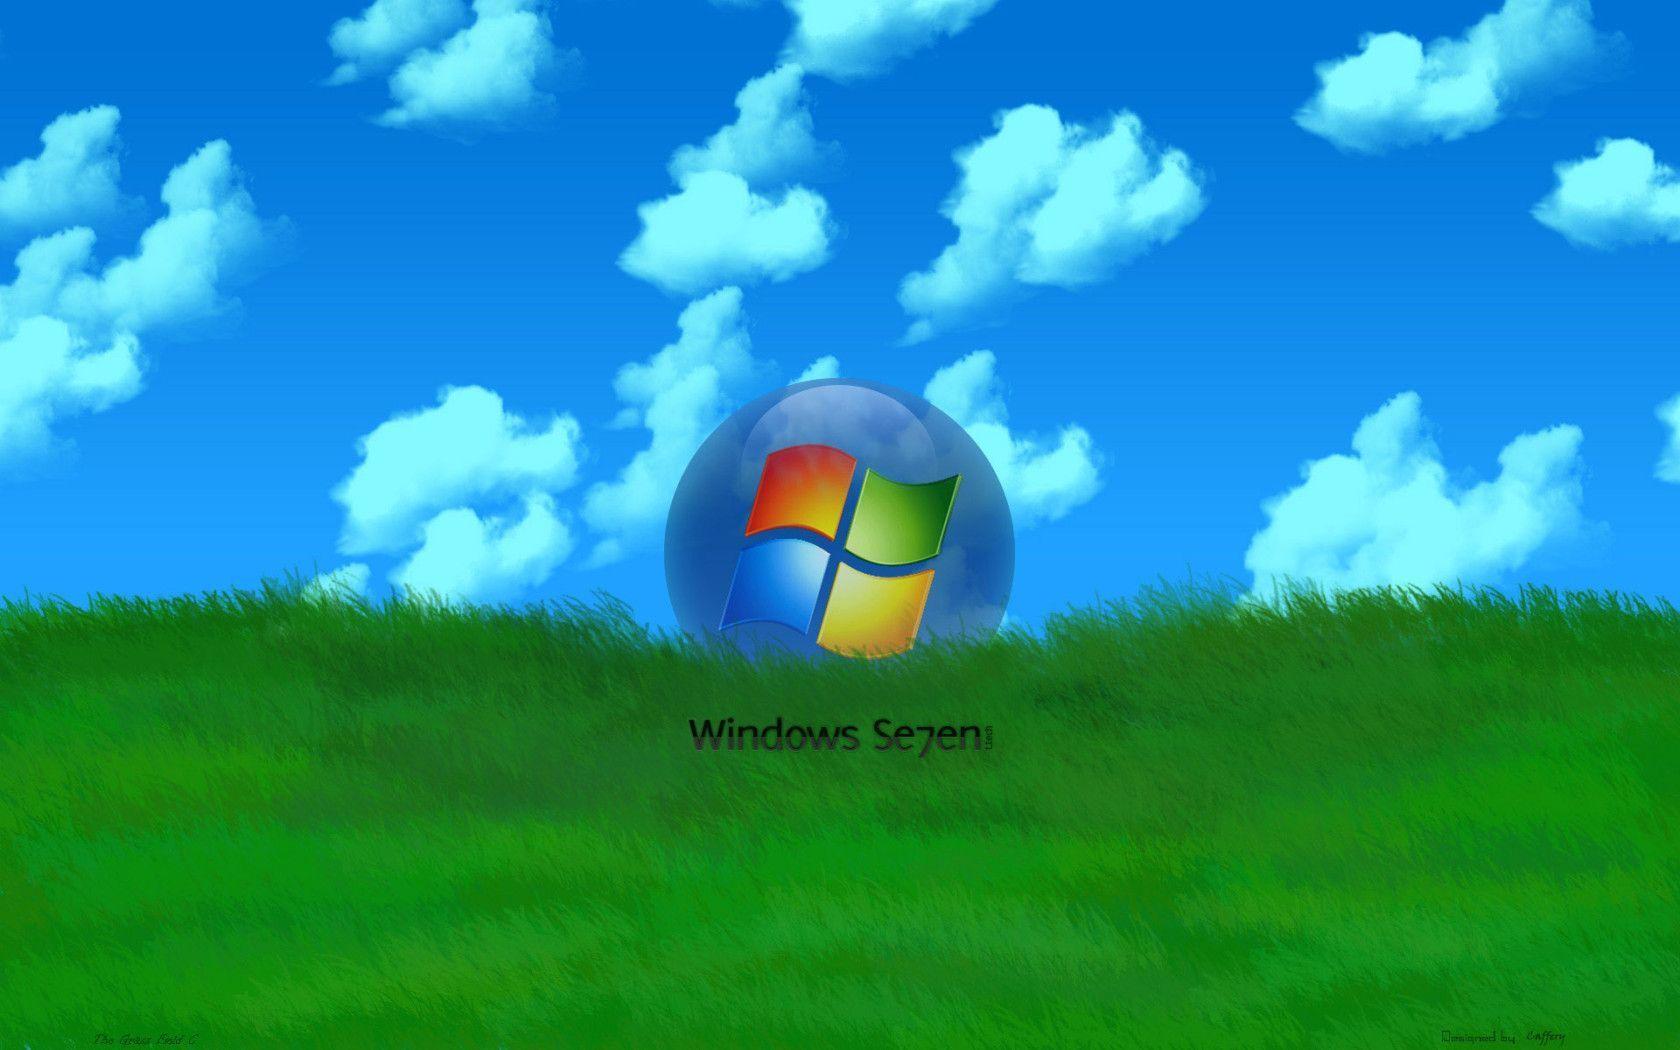 Microsoft Background 21 2057 HD Wallpaper. Wallroro